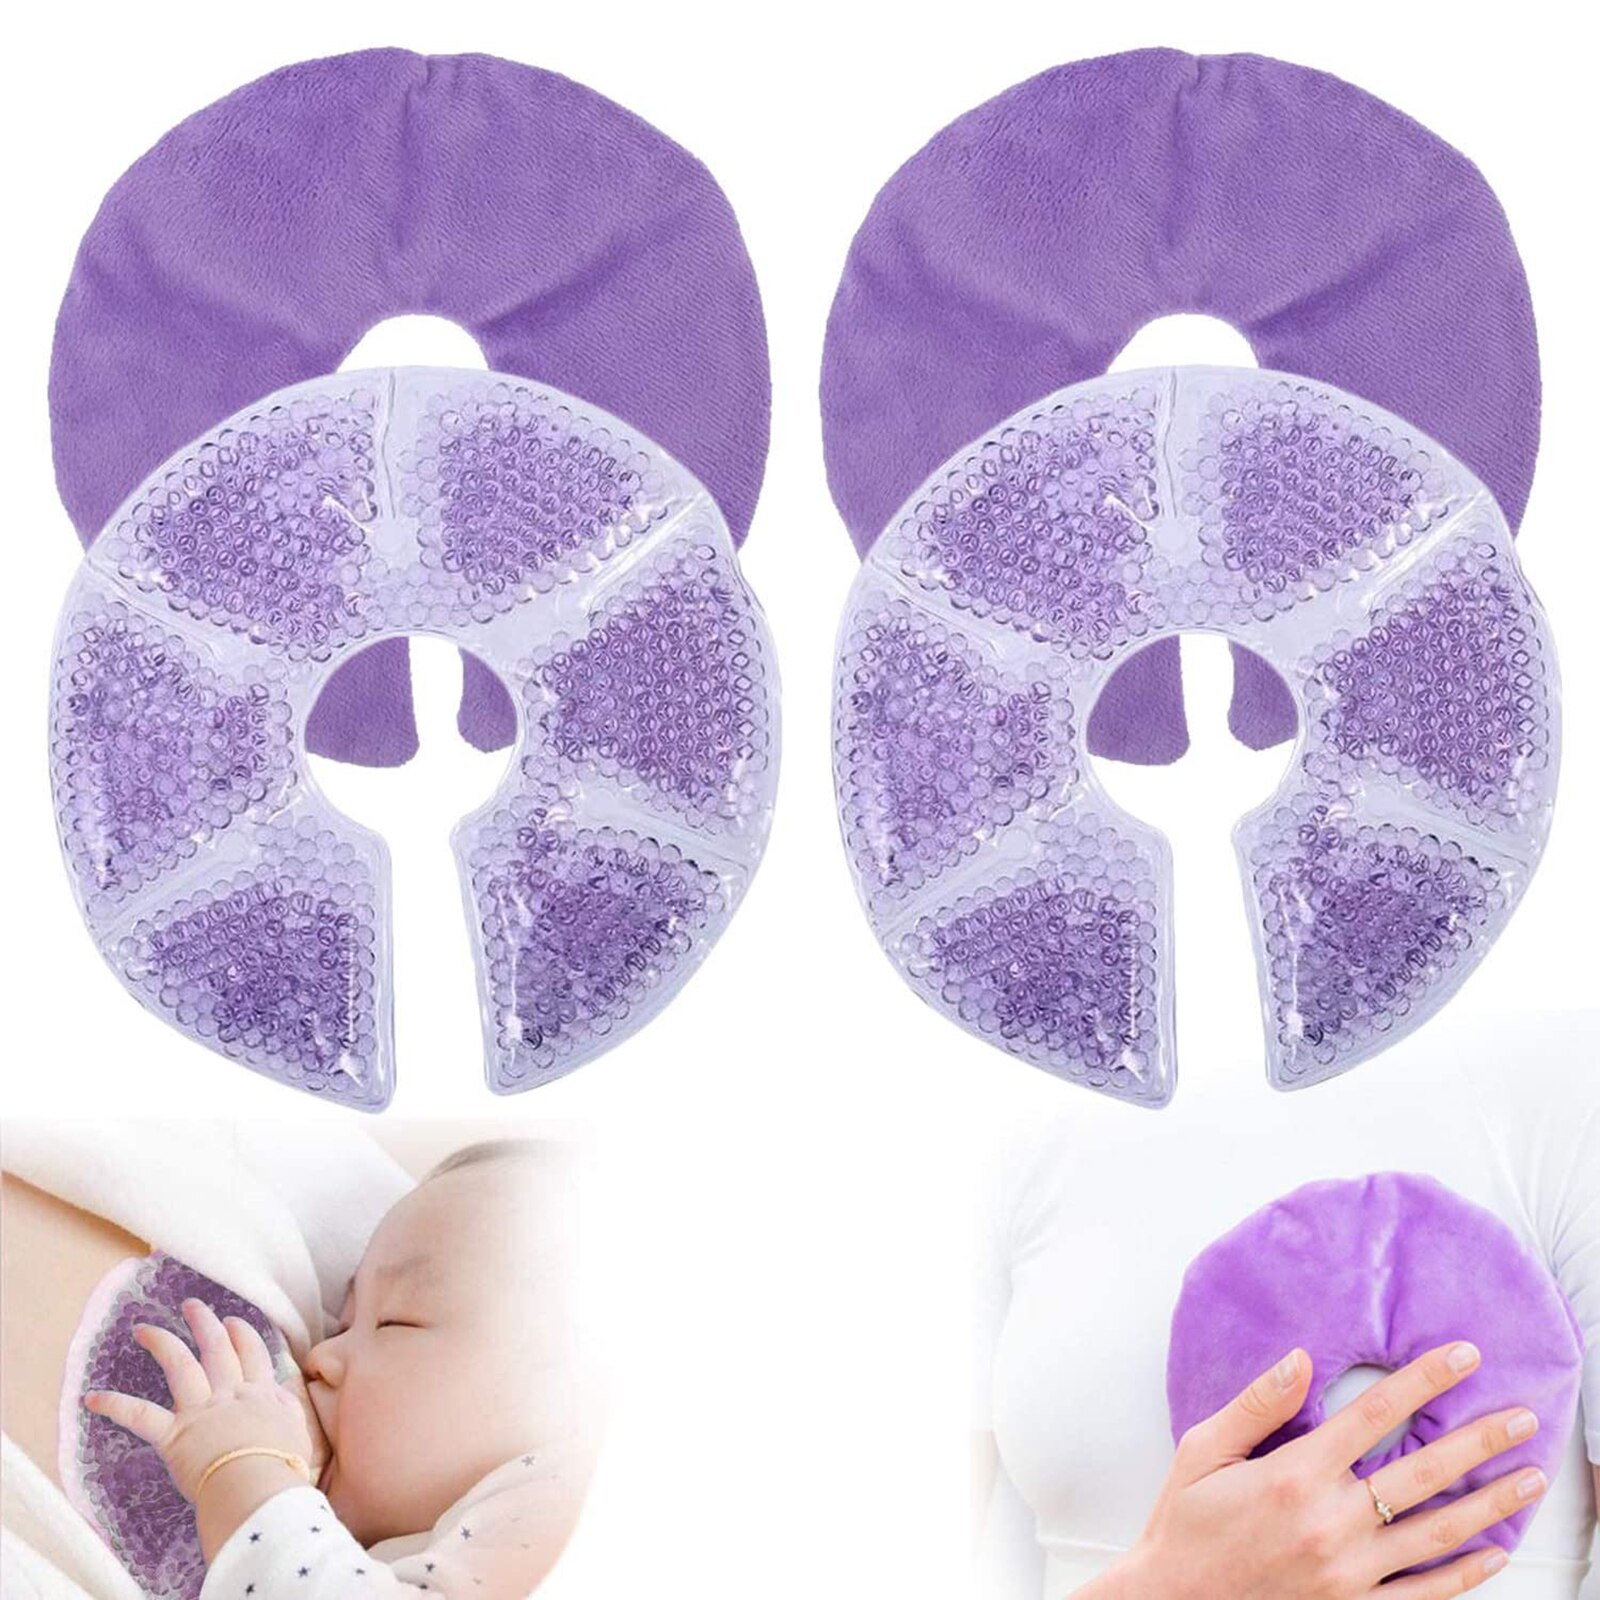 2 Stuks Borst Therapie Pack Ice Pack Pads Warm Of Koud Gebruik Voor Verpleging Moeder Koude Borstvoeding Gel Pads